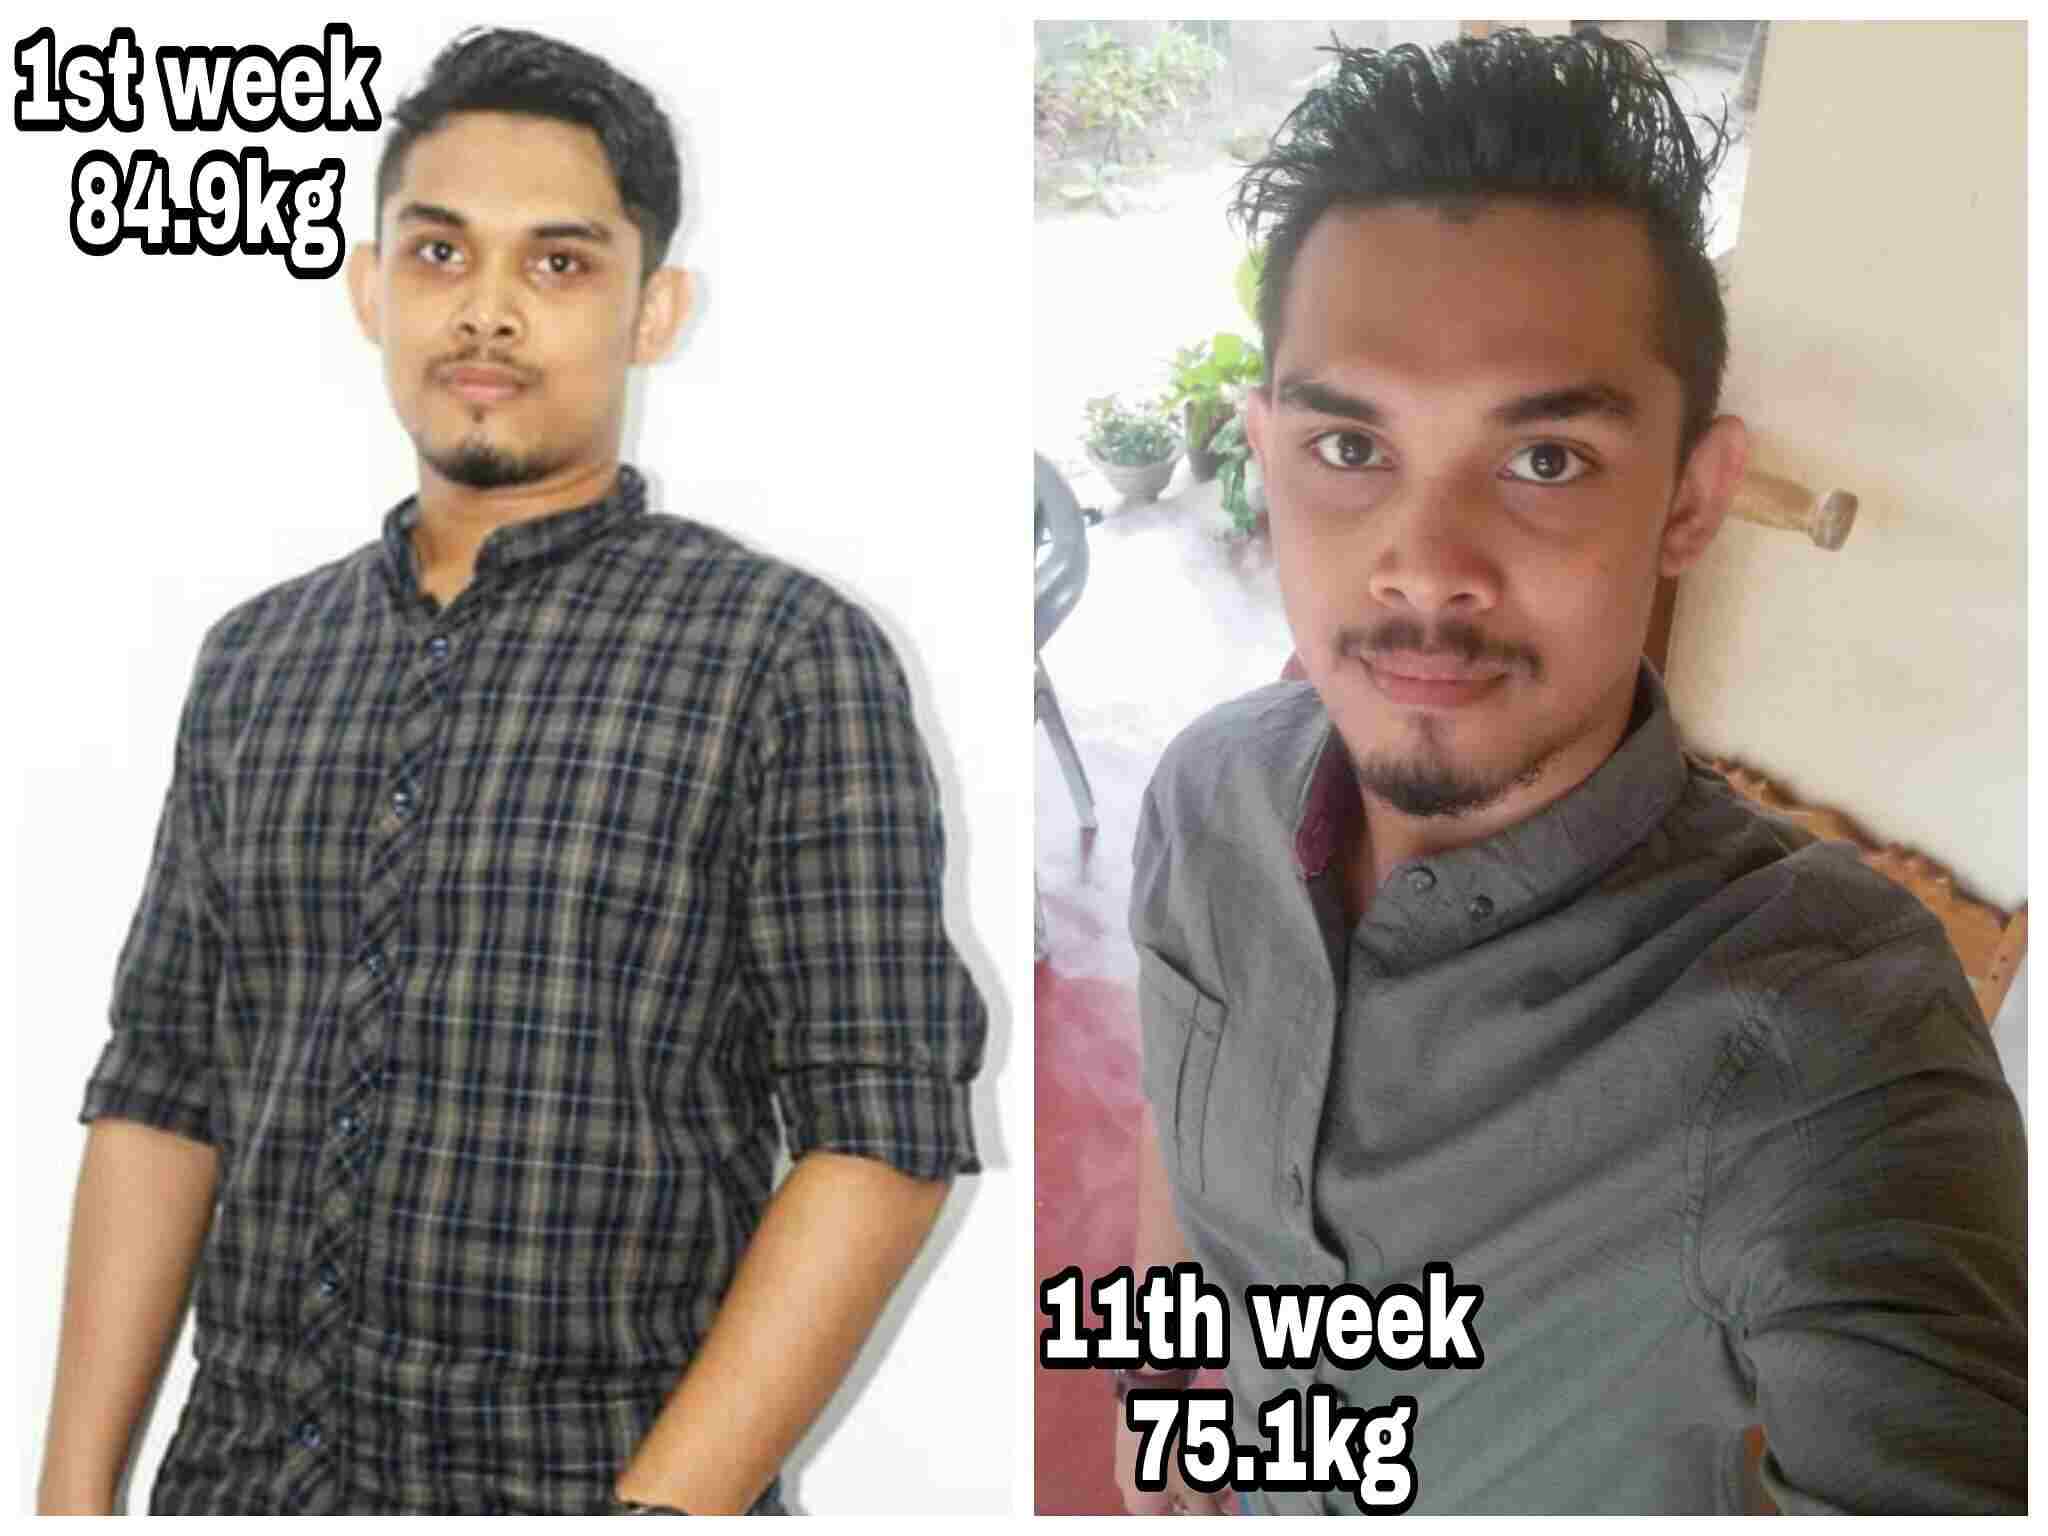 weight loss diet plan, health and wellness, celebrities look alike